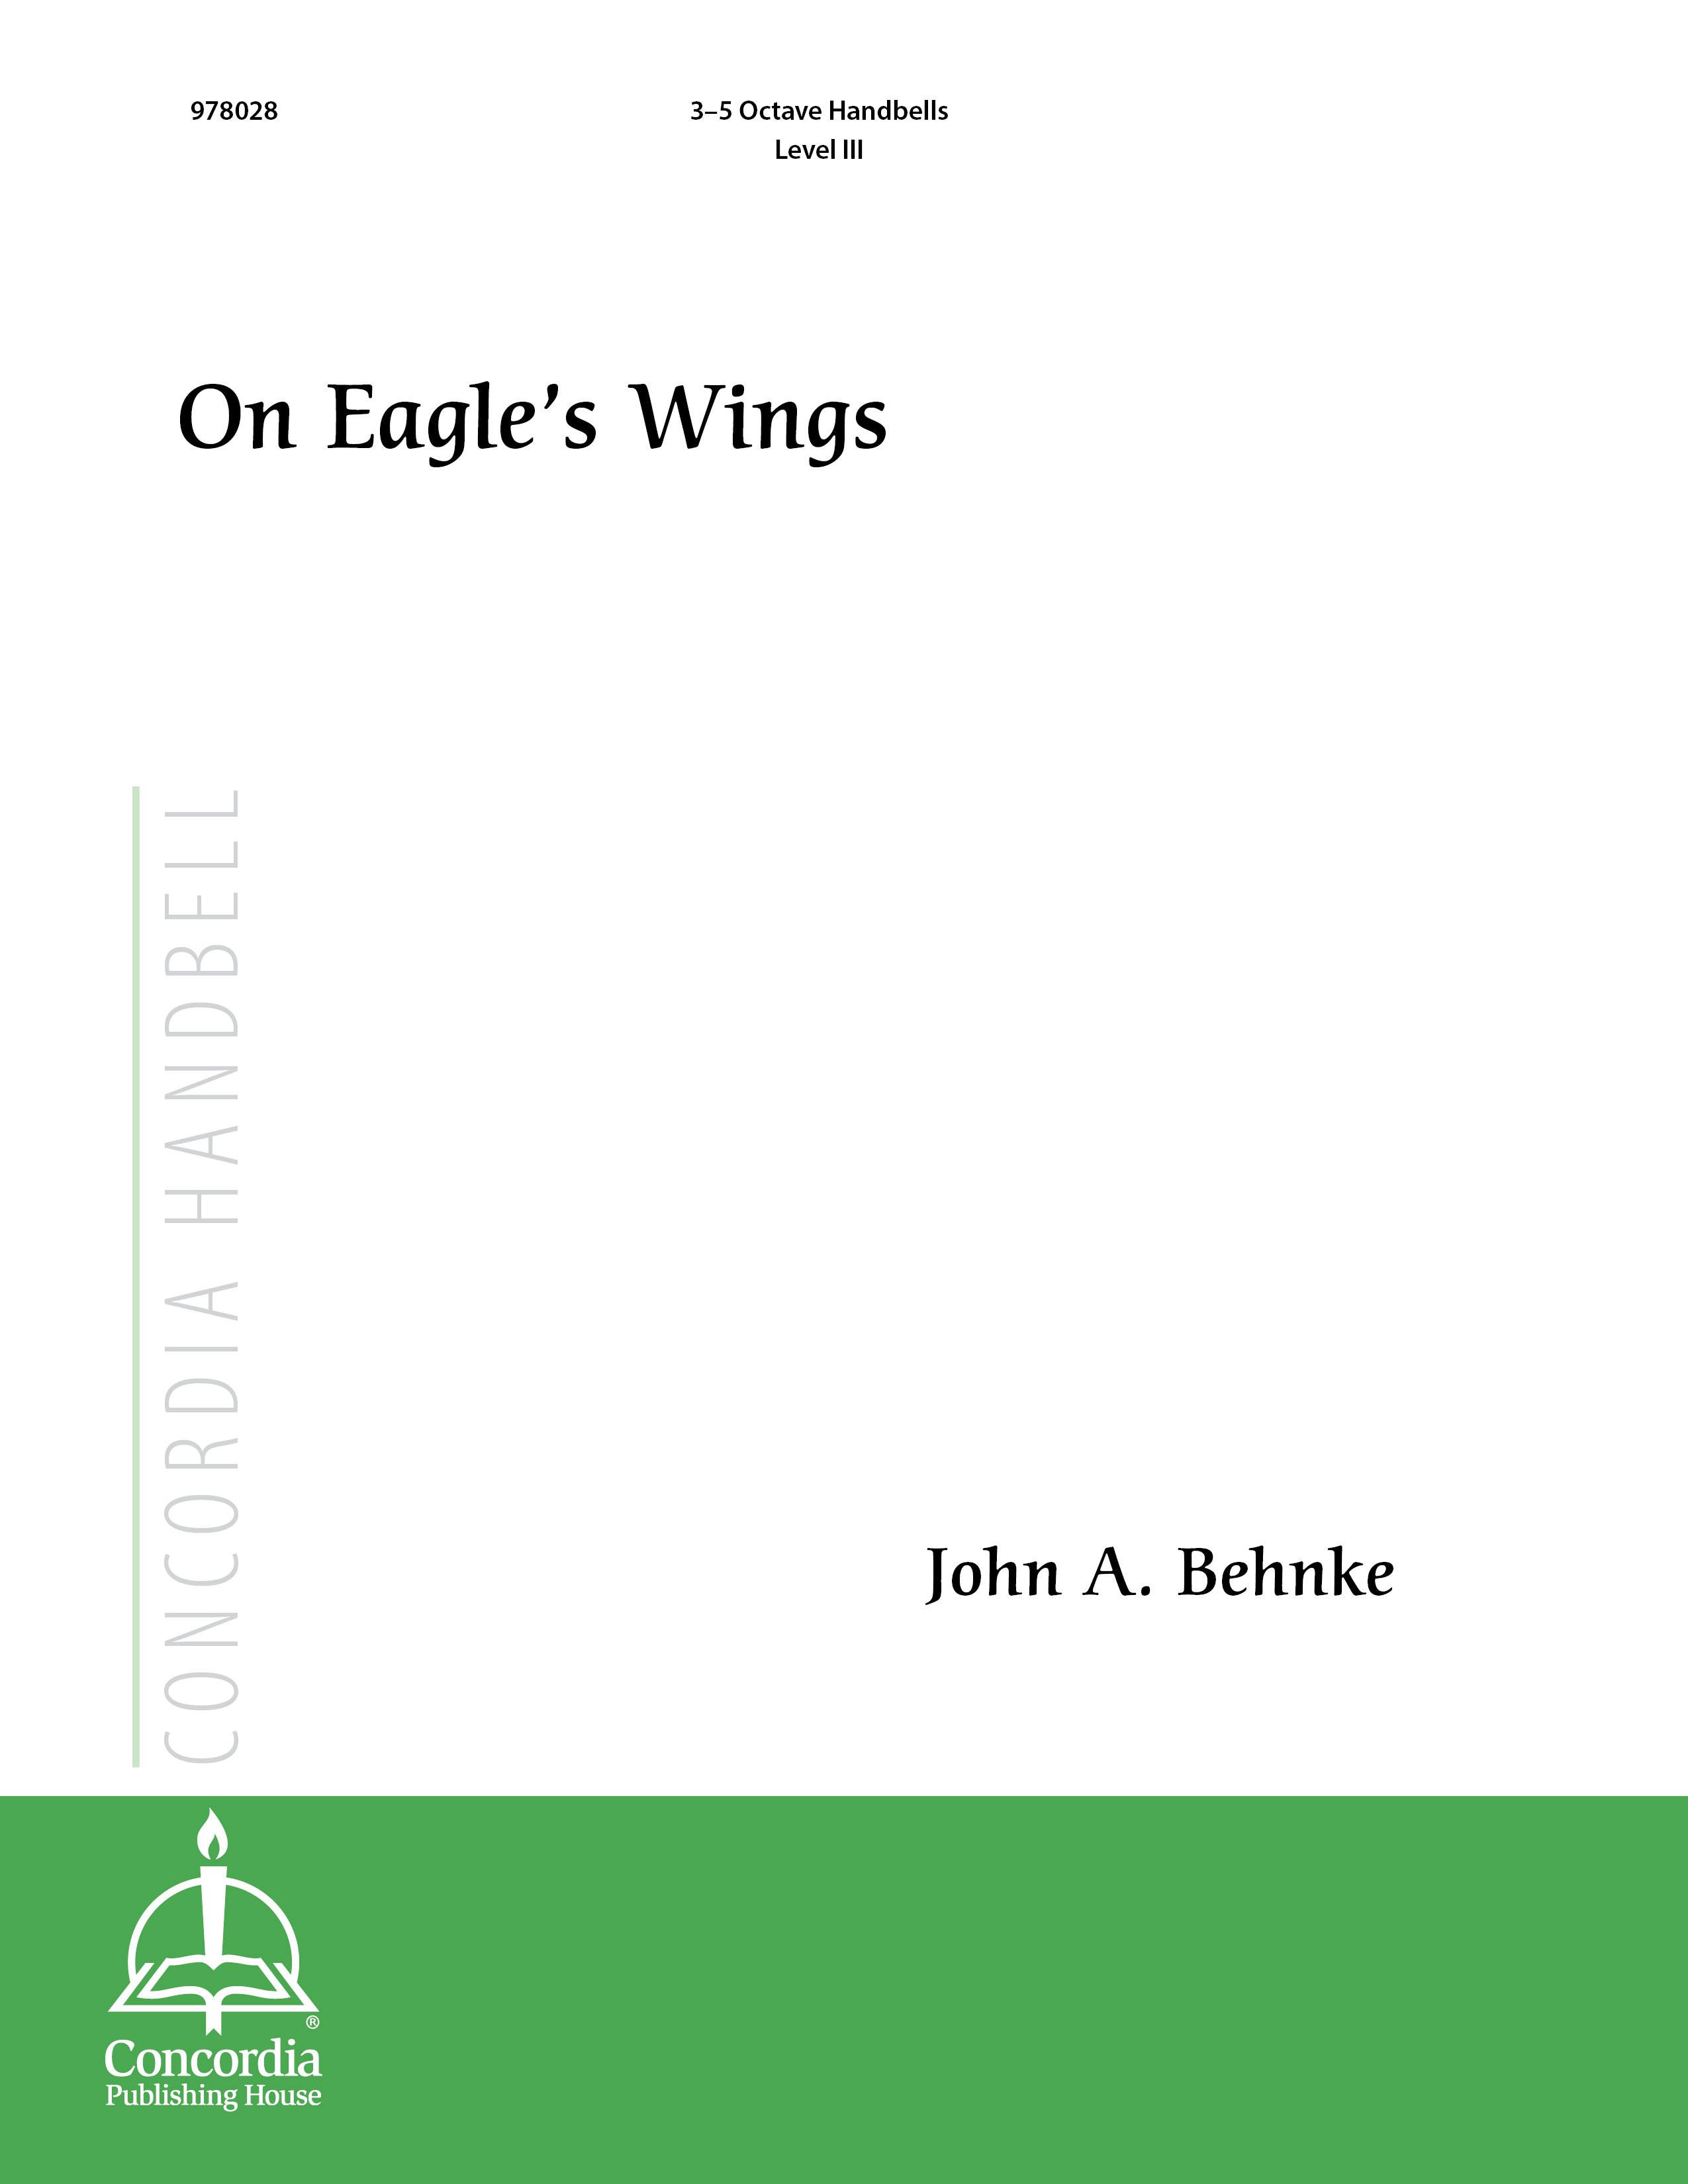 On Eagle's Wings handbell sheet music cover